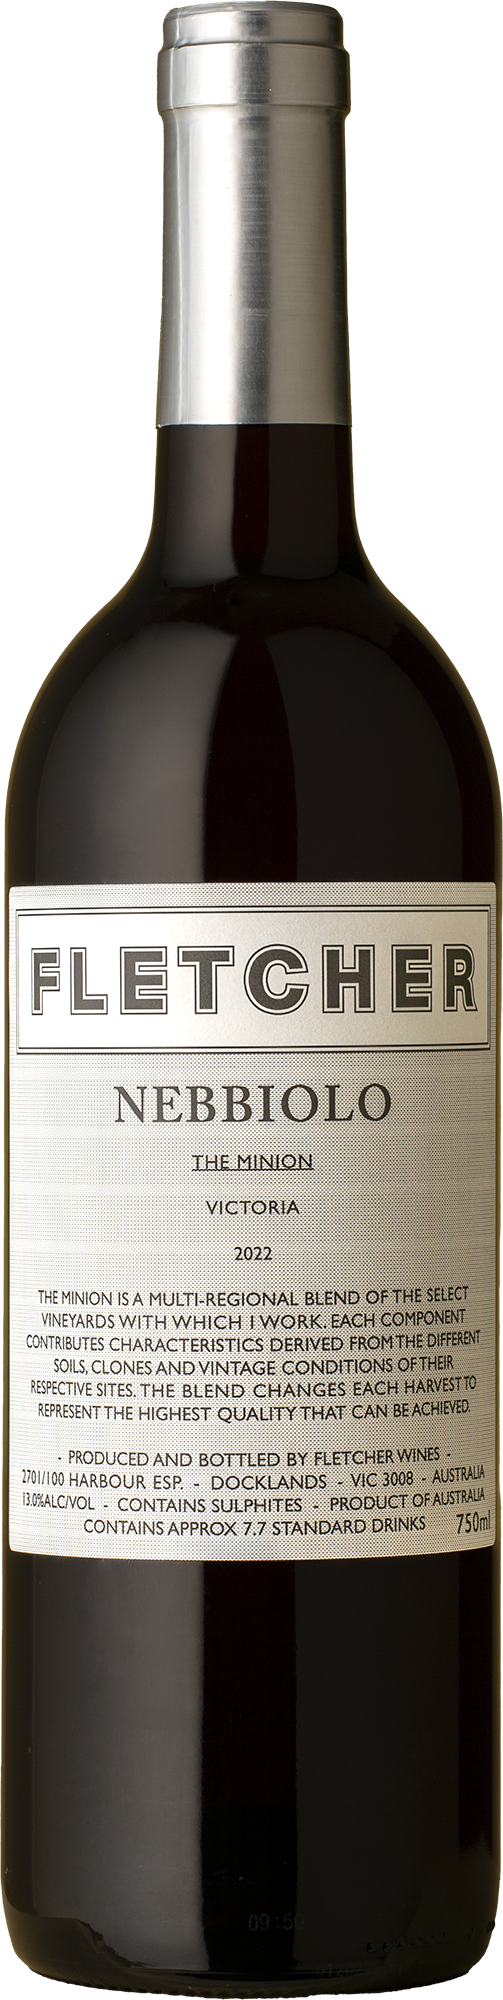 Fletcher - Minion Nebbiolo 2022 Red Wine